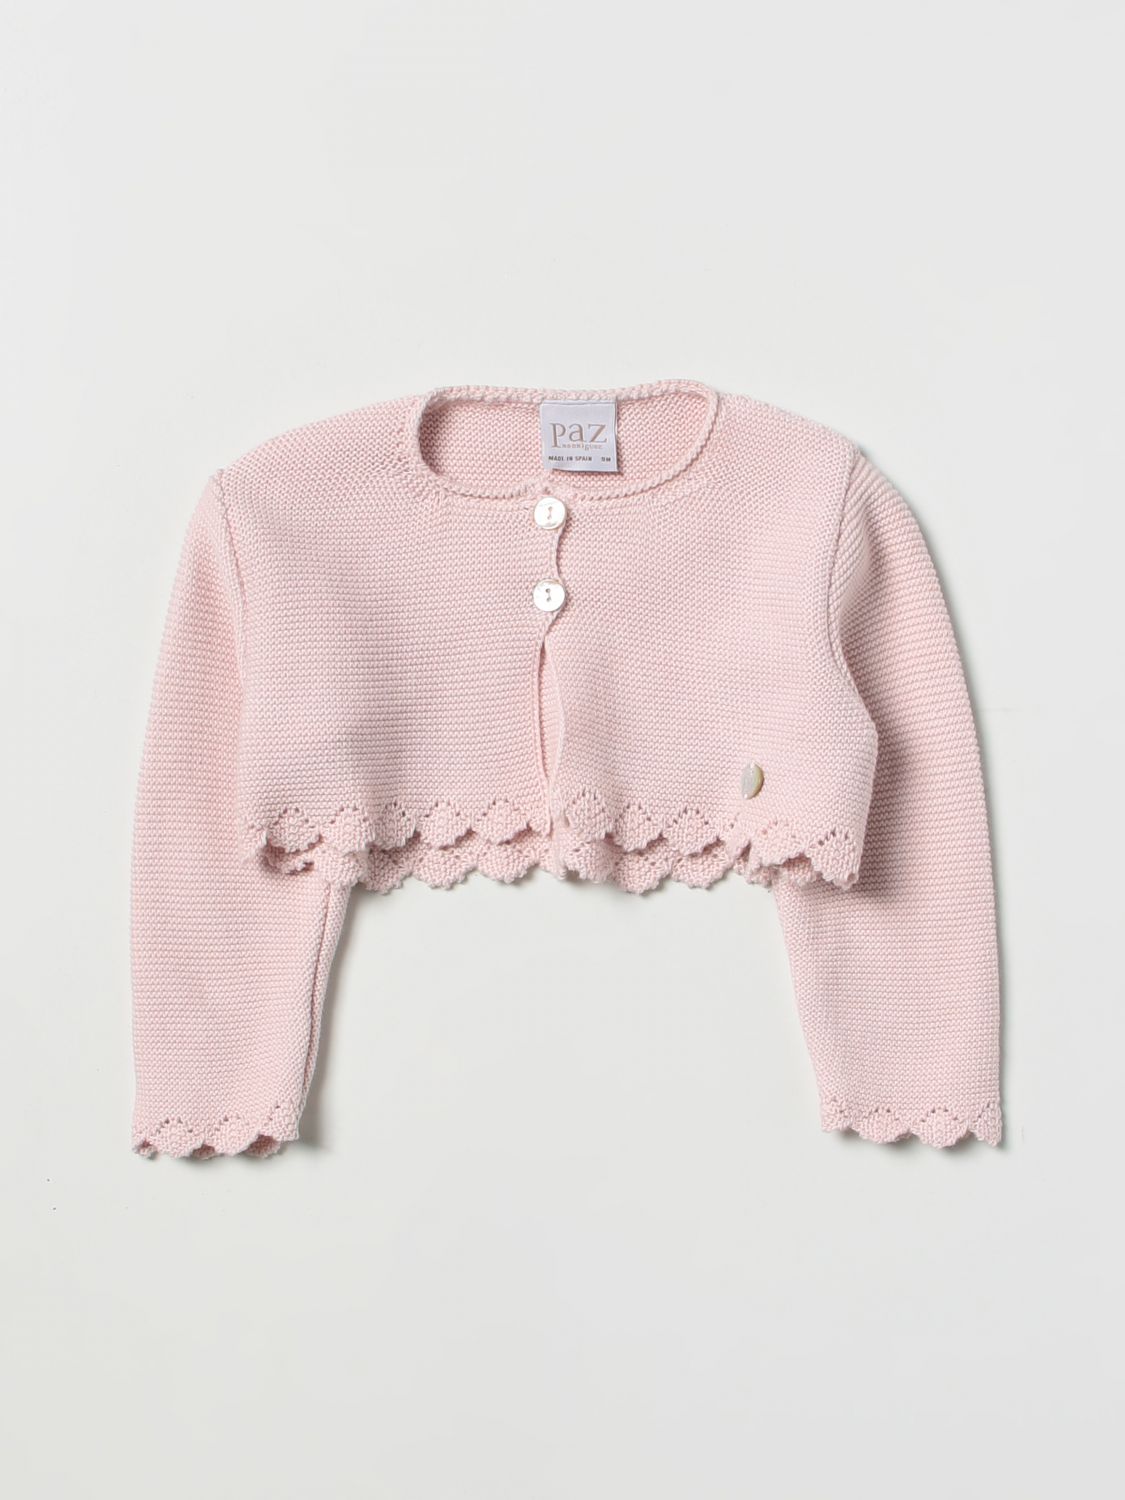 Paz Rodriguez Babies' Sweater  Kids Color Pink